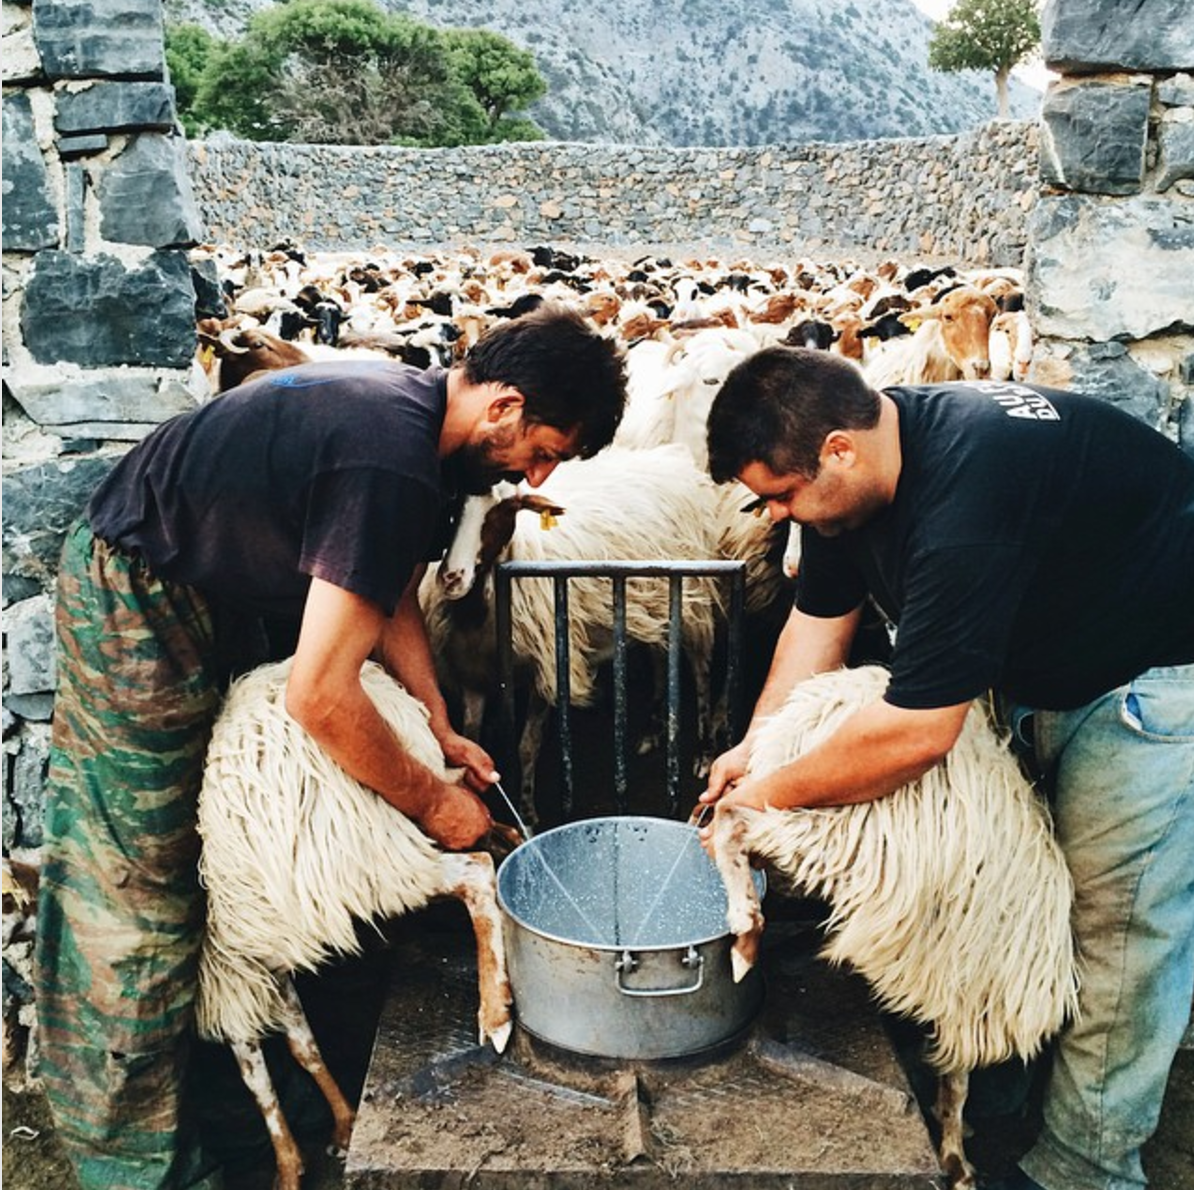 Chelsea Loren captured two rustic sheep farmers on island of Crete, Greece while milking sheep